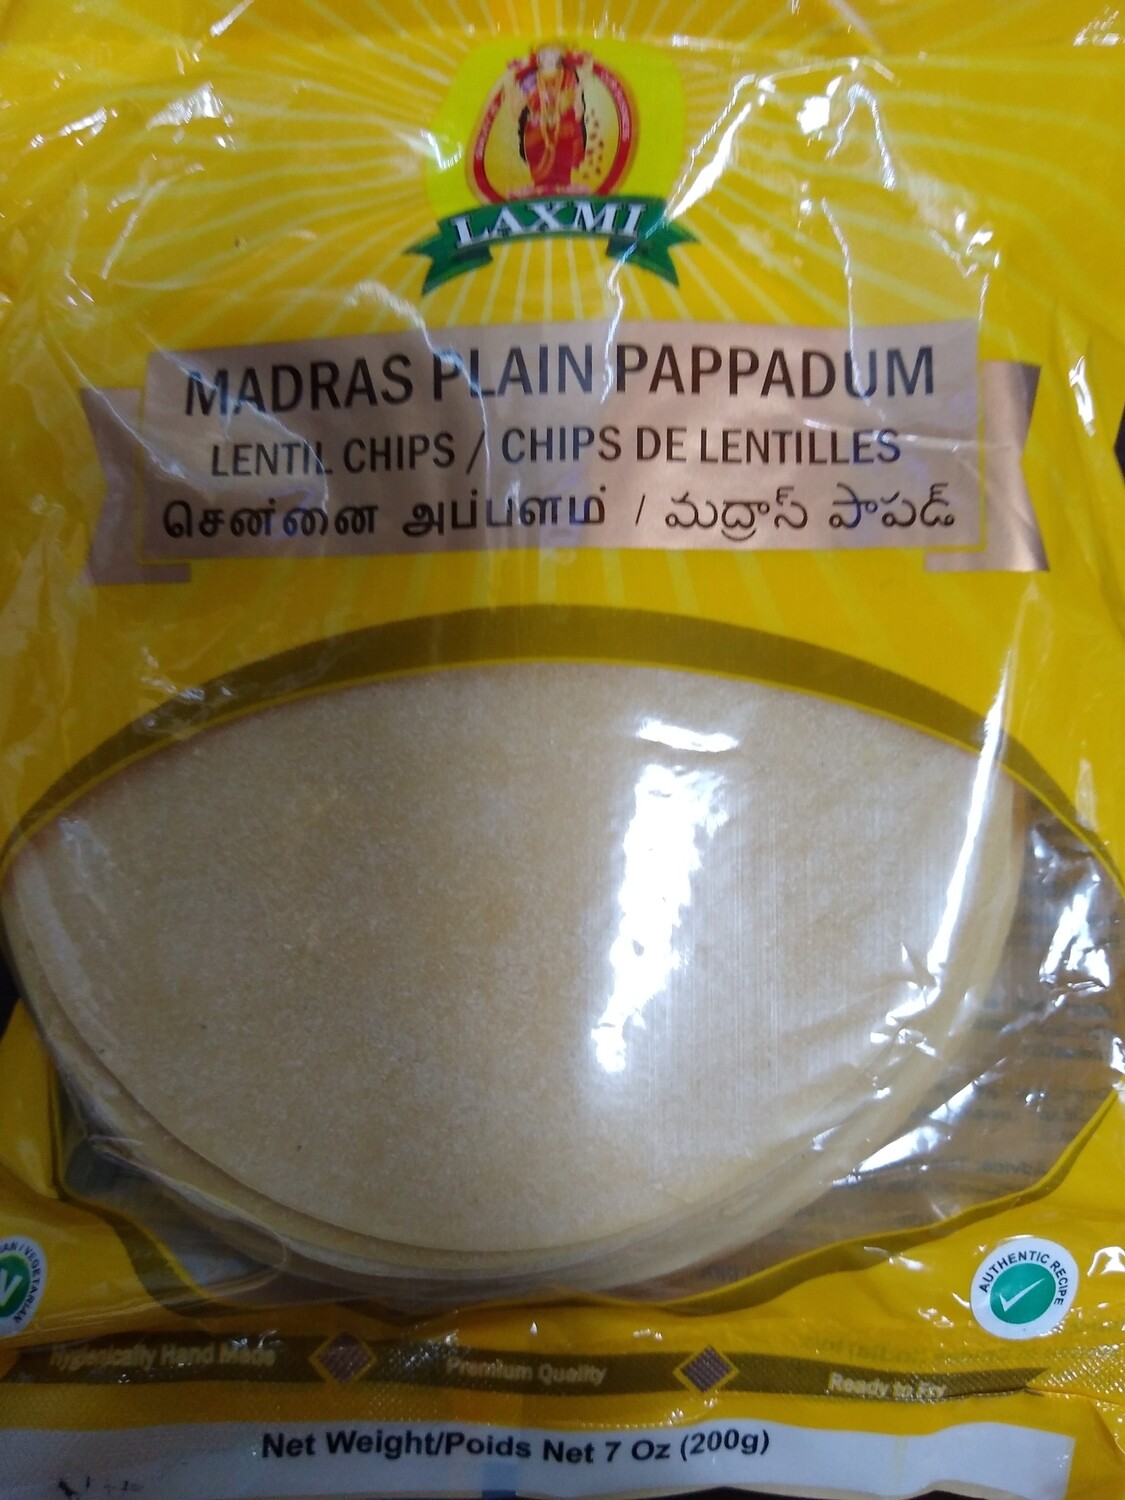 Laxmi Madras Plain Pappadam 200g